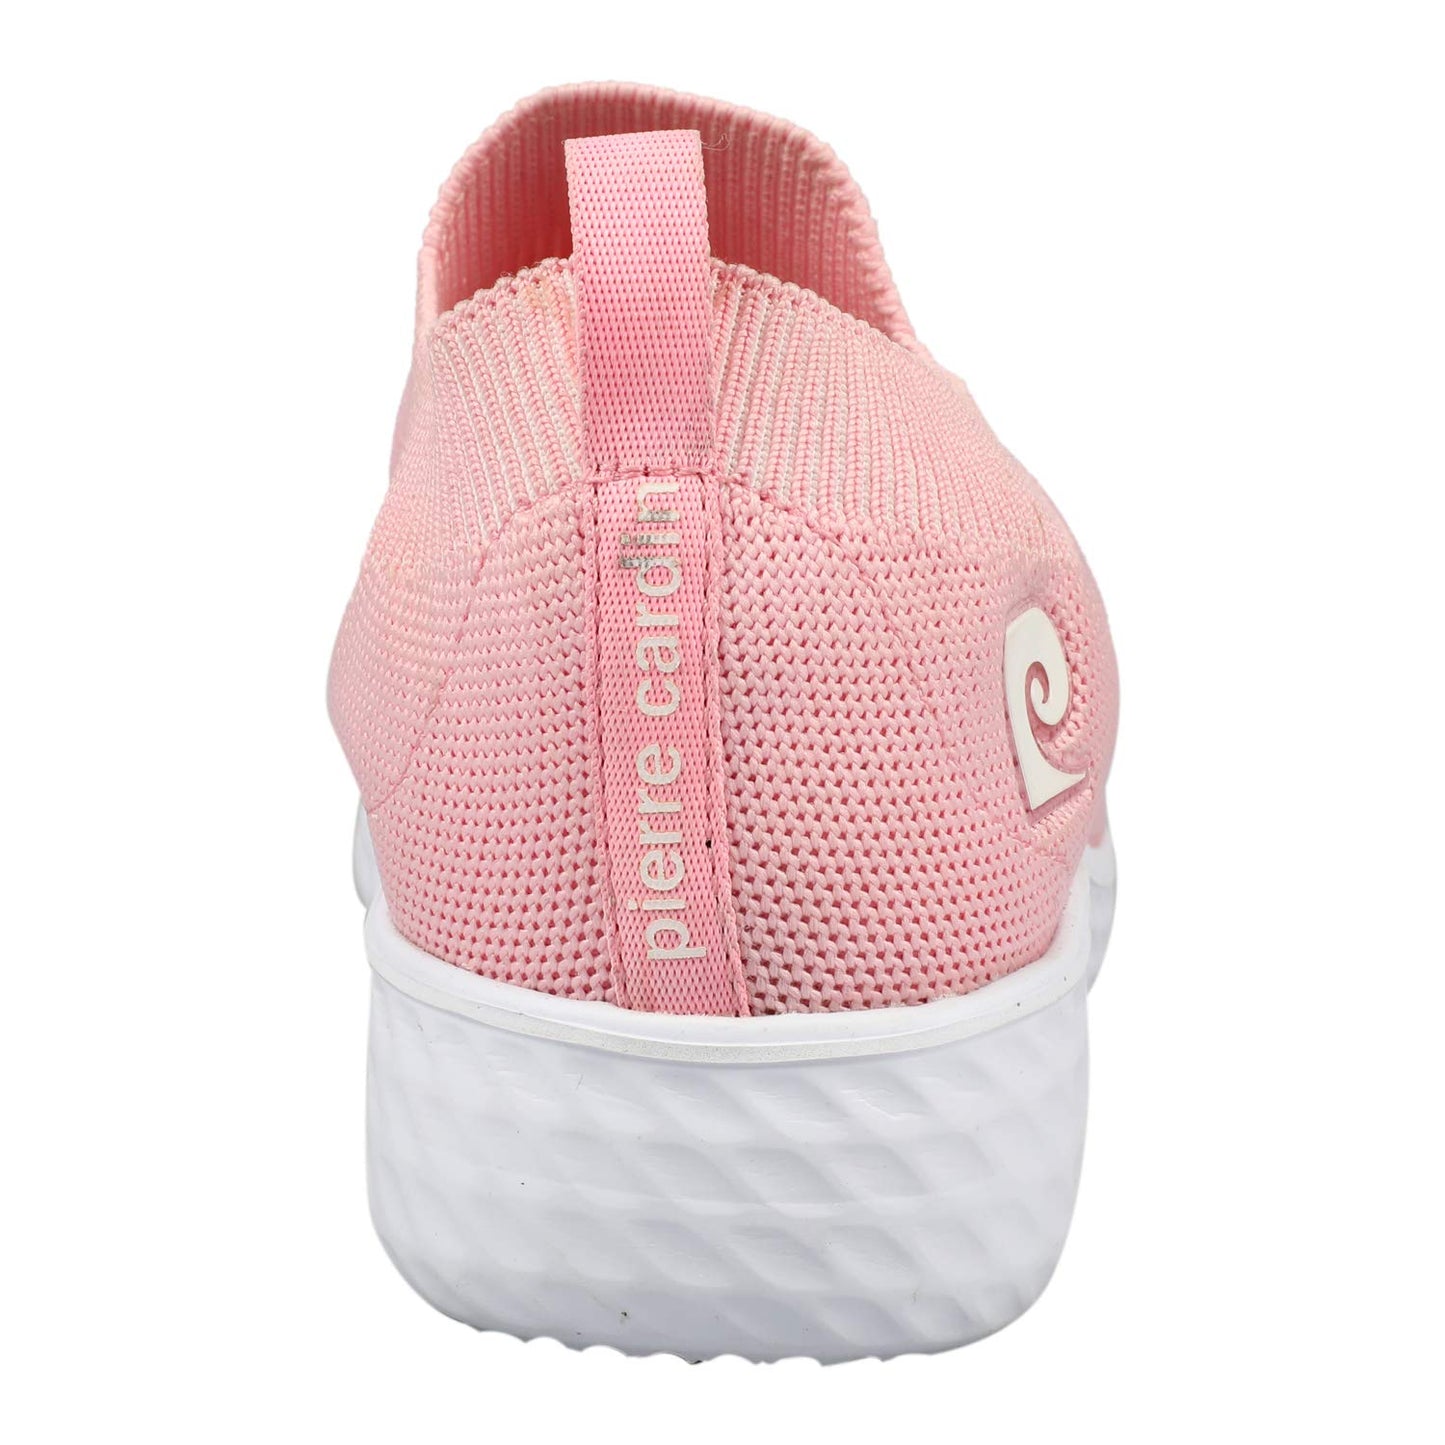 Pierre Cardin Women's Roya Deux Peach Walking Shoes-5 UK (38 EU) (Energia PC0305)